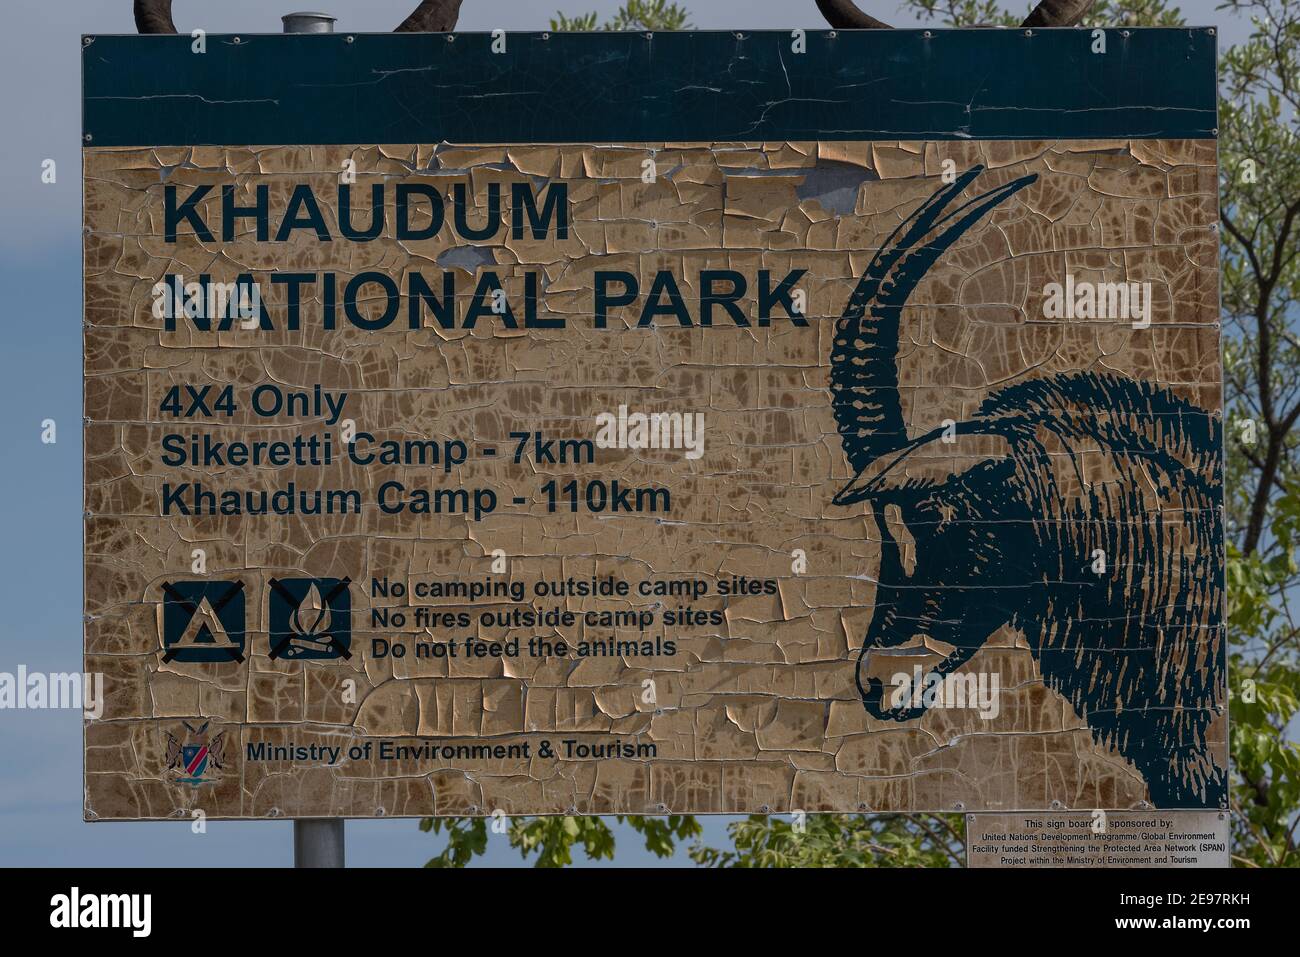 La señal de entrada del Parque Nacional de Khaudum, Namibia Foto de stock